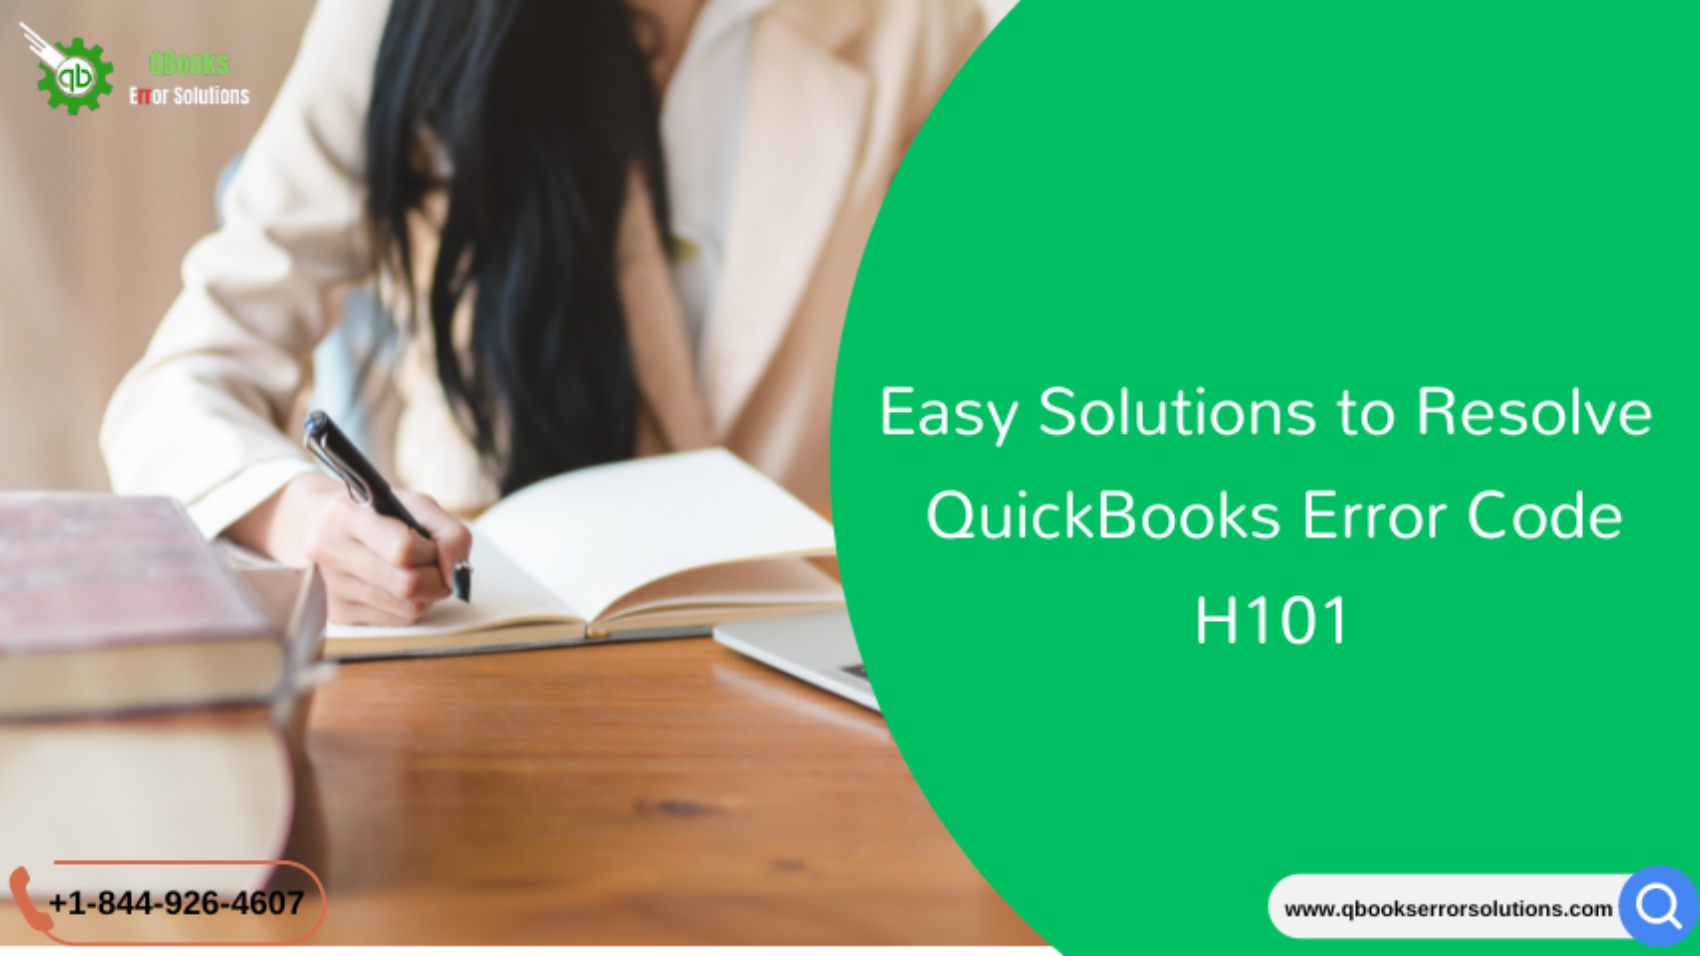 How to Resolve QuickBooks Error Code H101